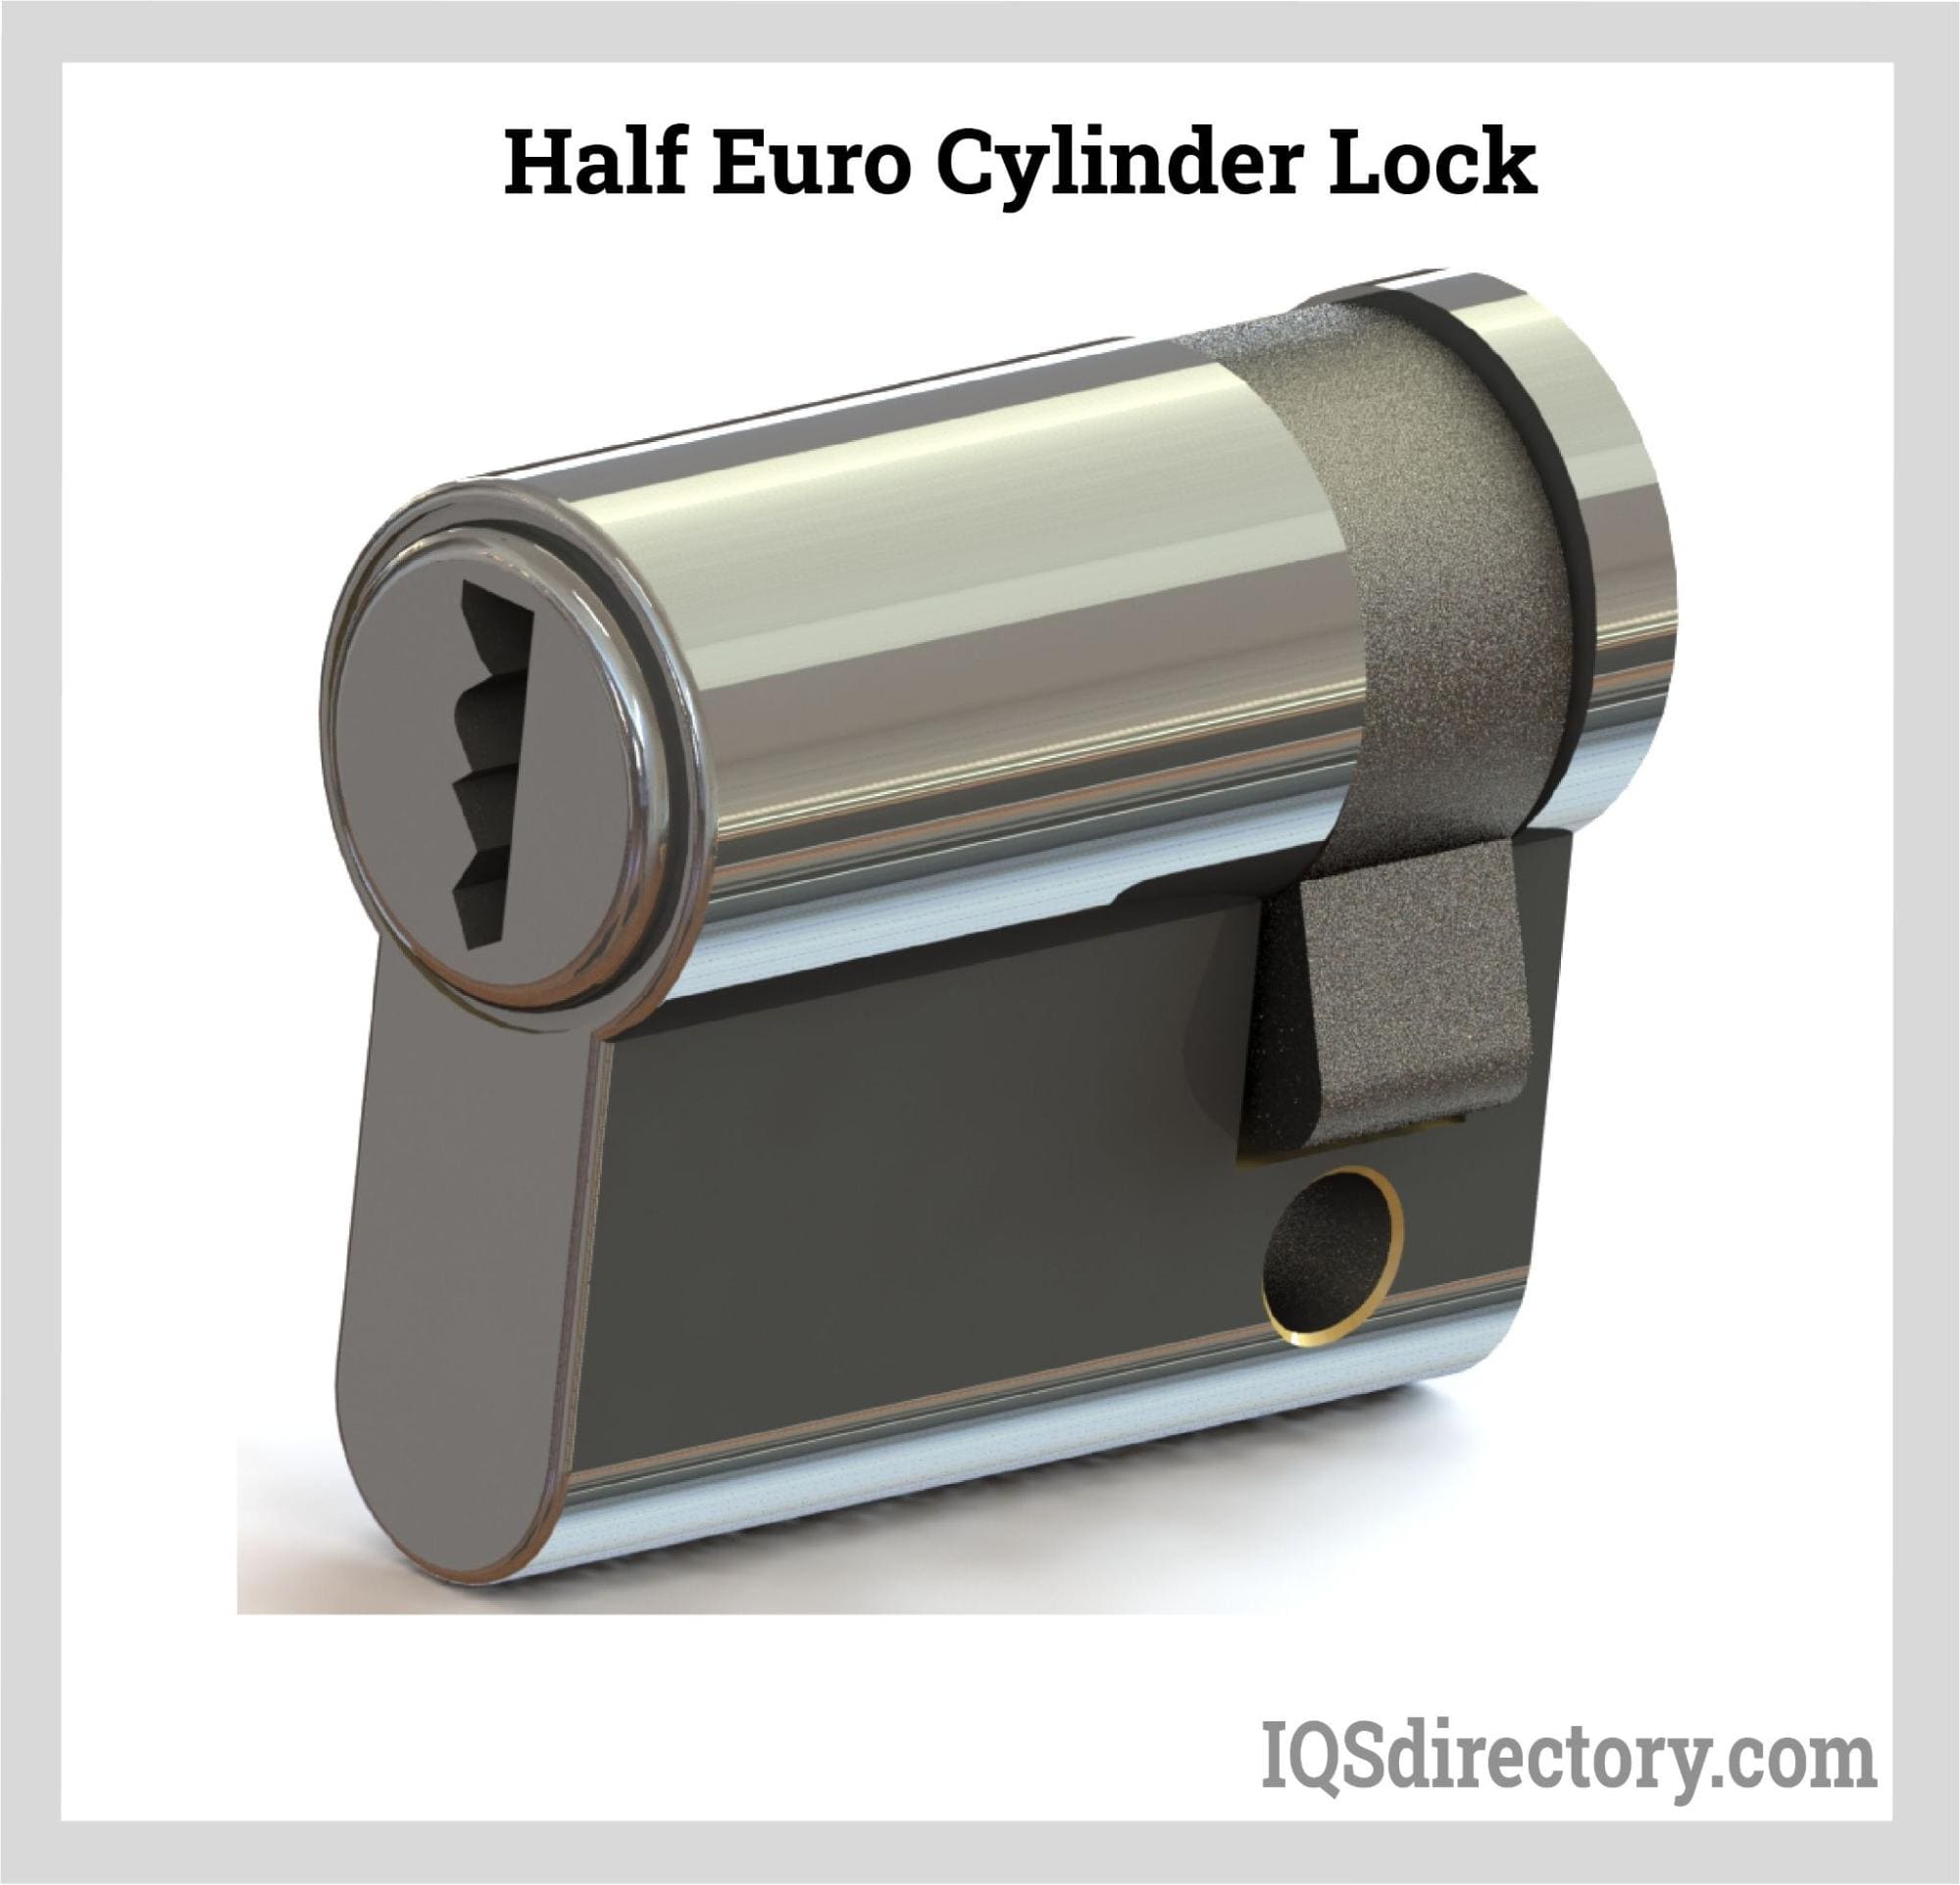 Half Euro Cylinder Lock